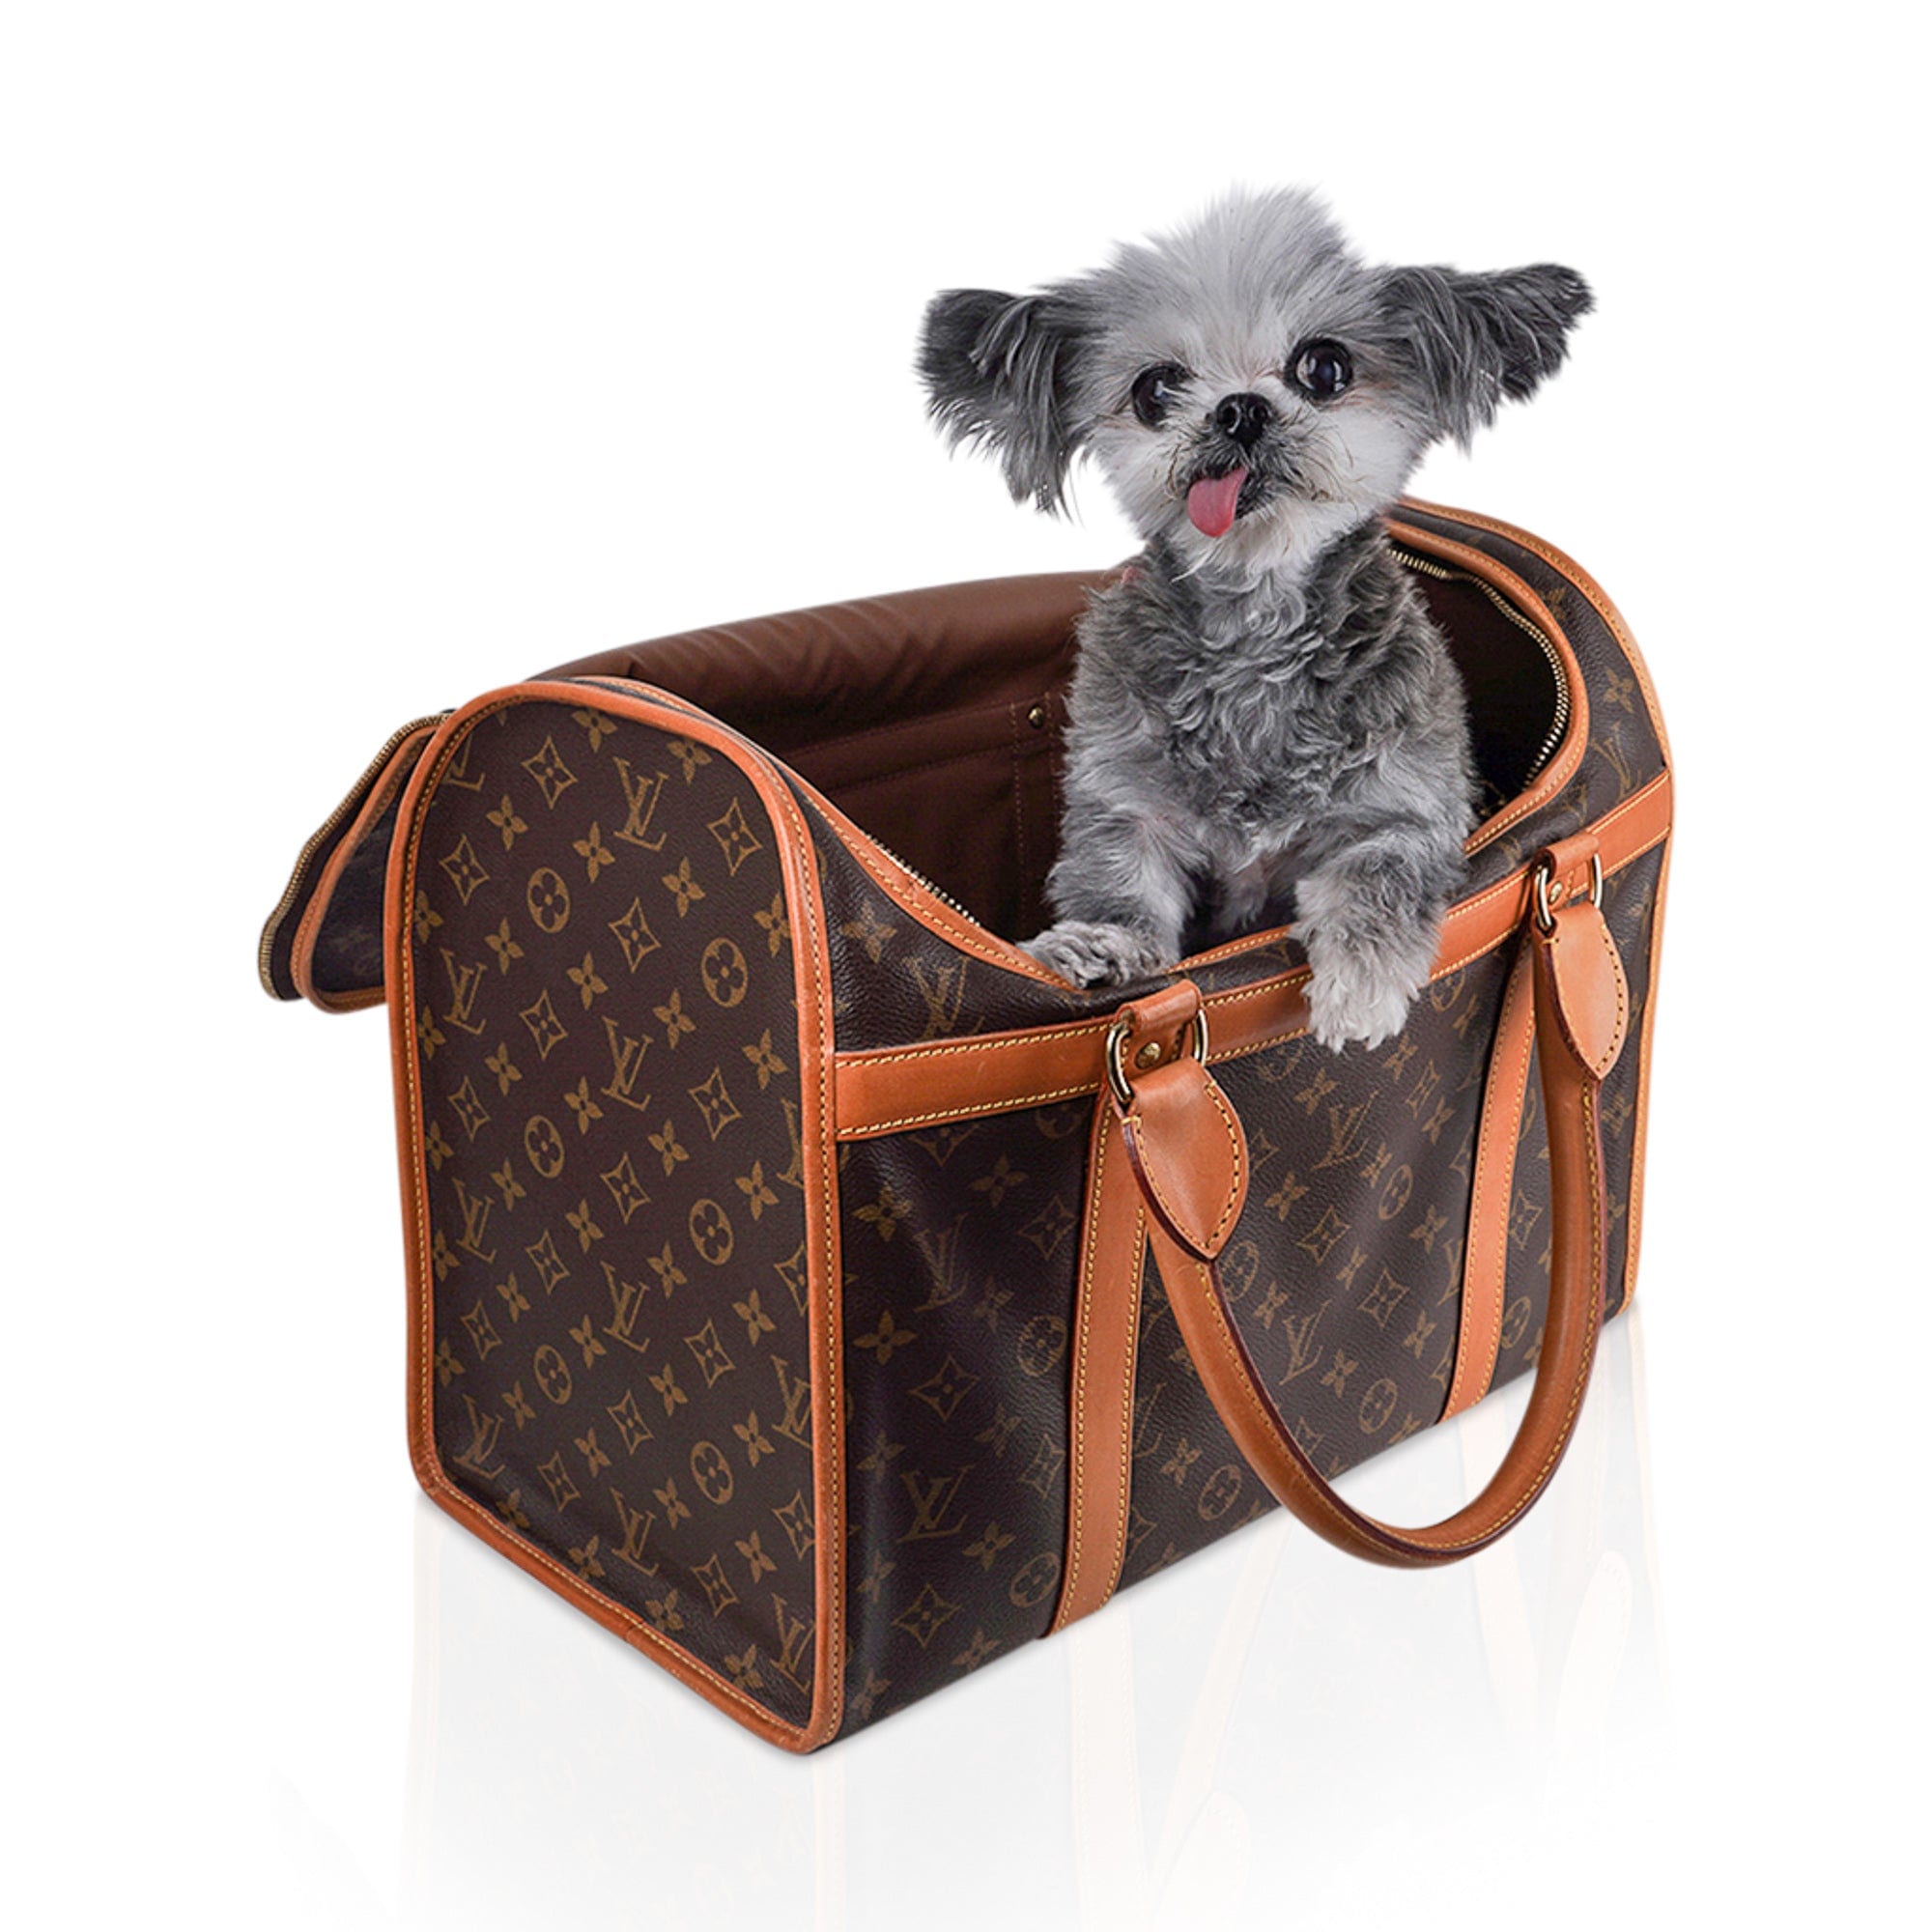 Dog Bag Monogram Canvas - Trunks and Travel